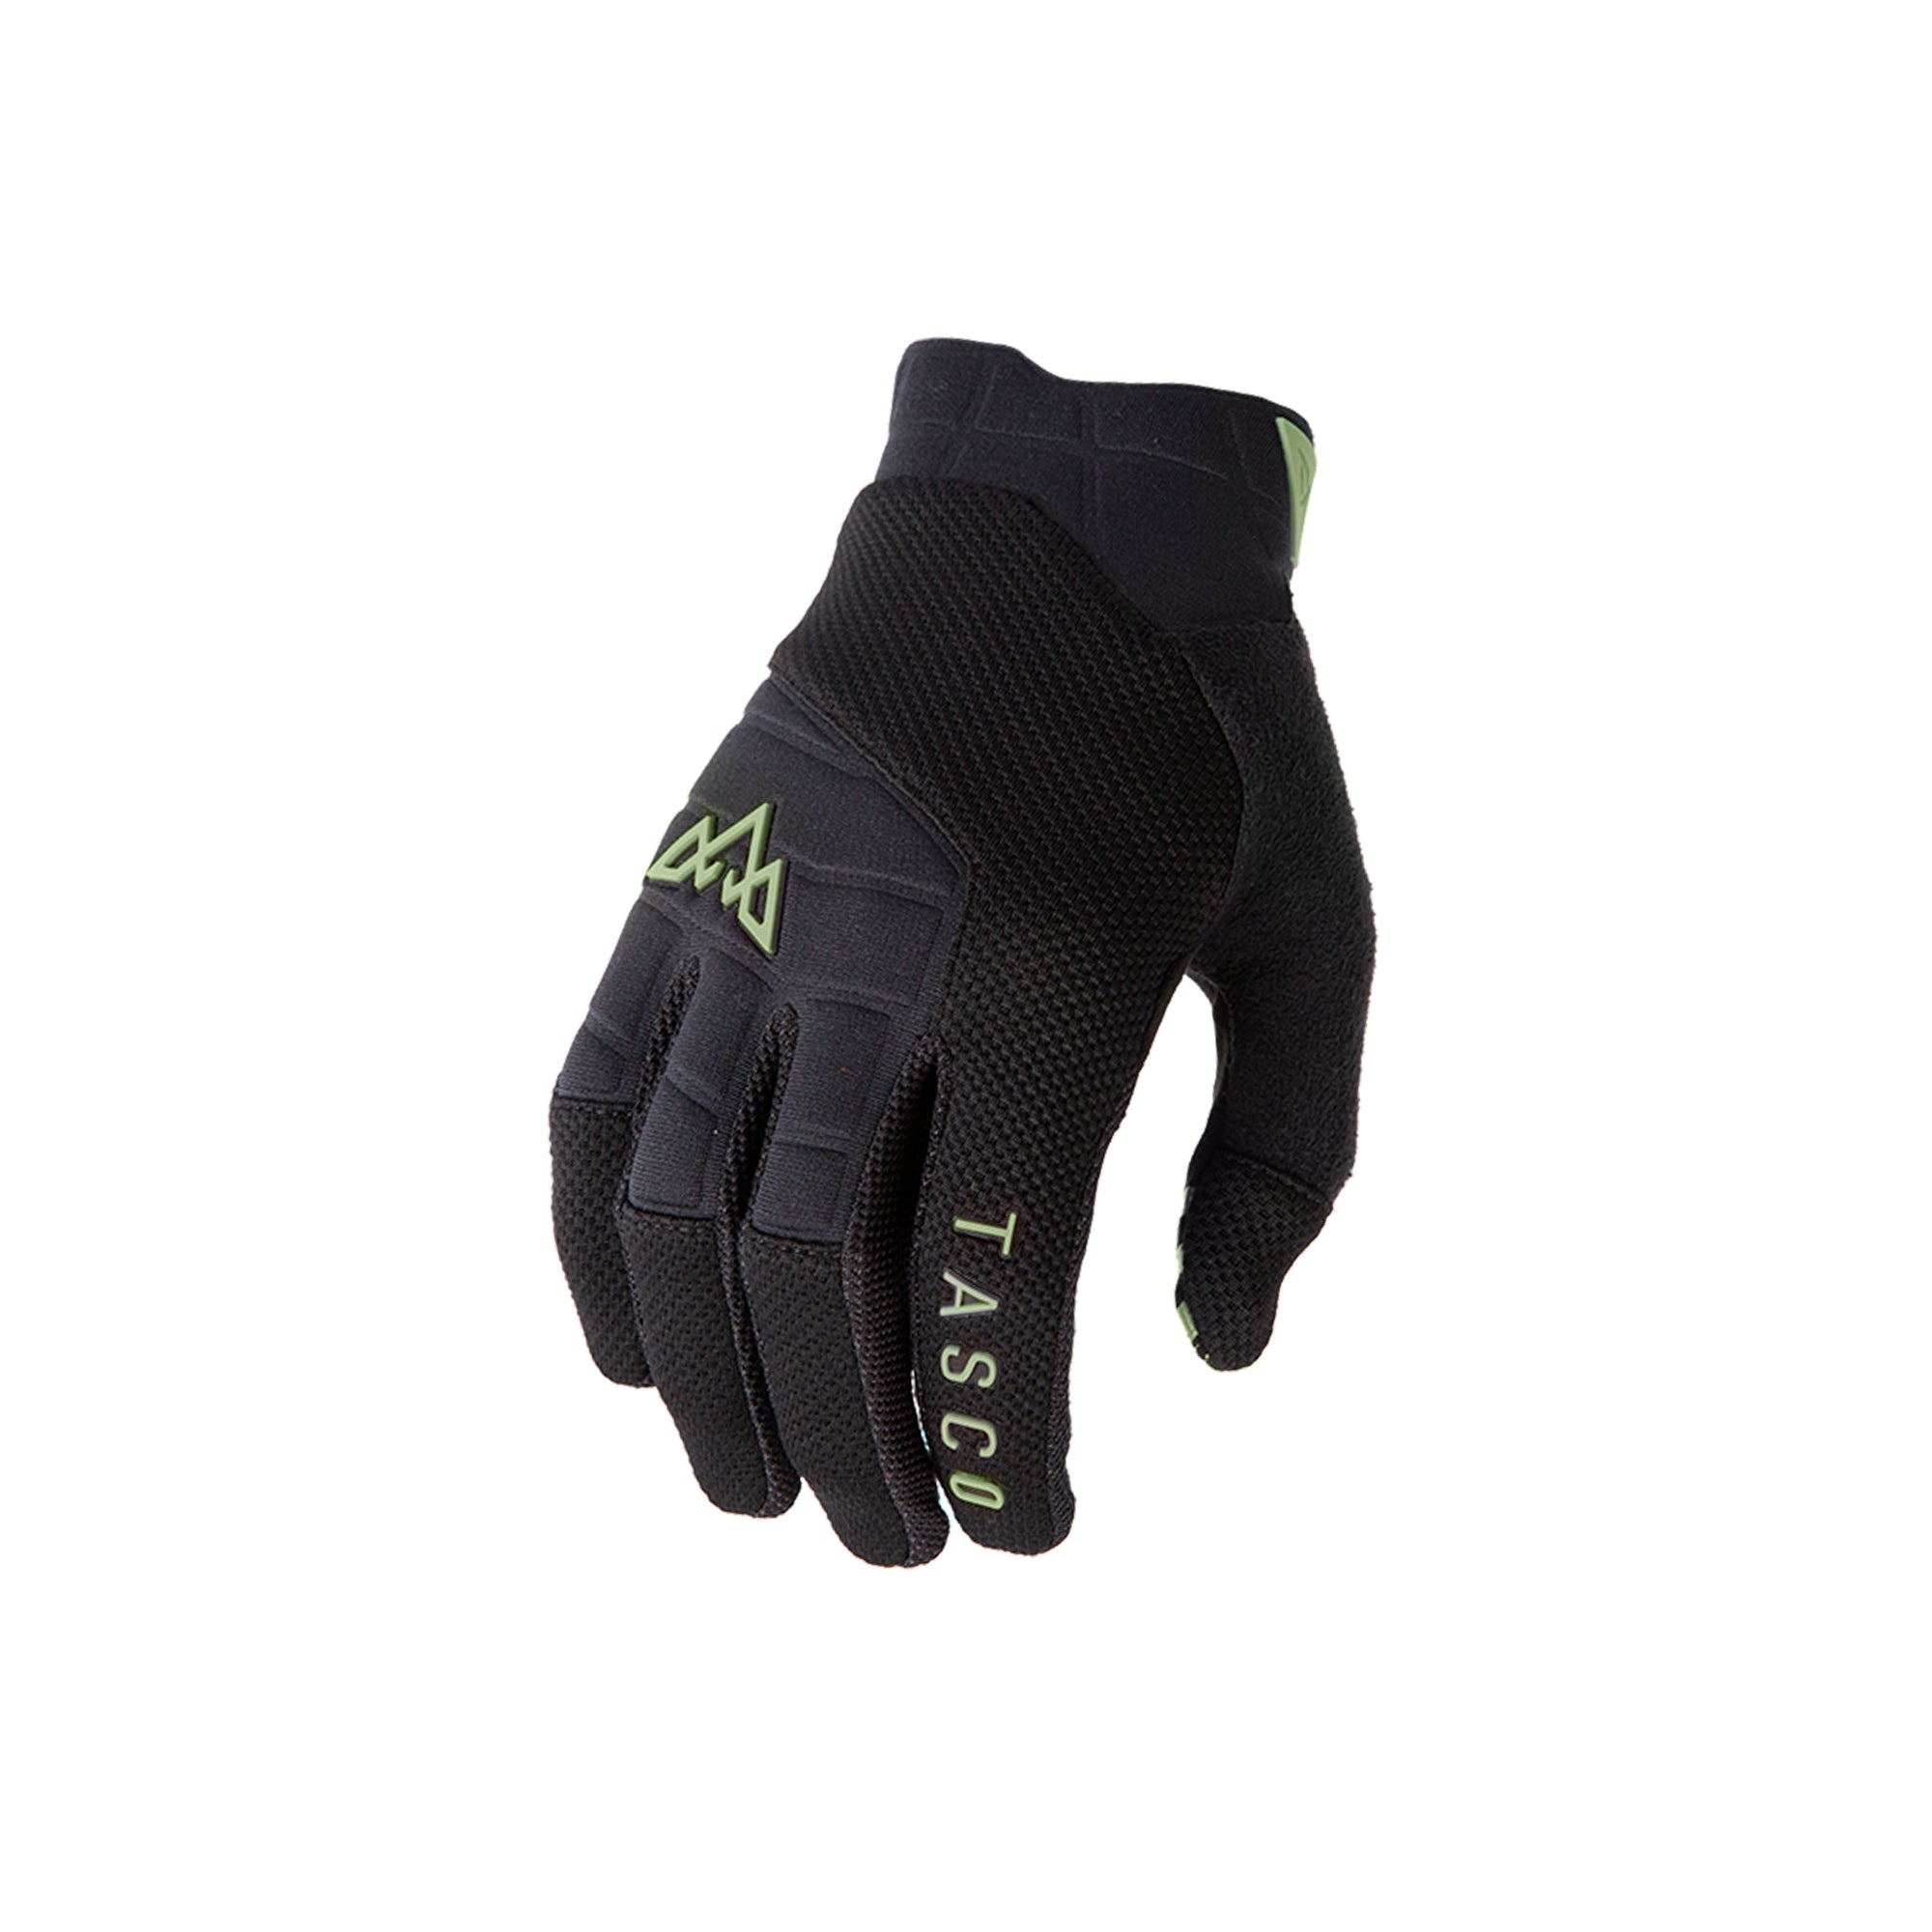 TASCO MTB Pathfinder Gloves black with sage accents